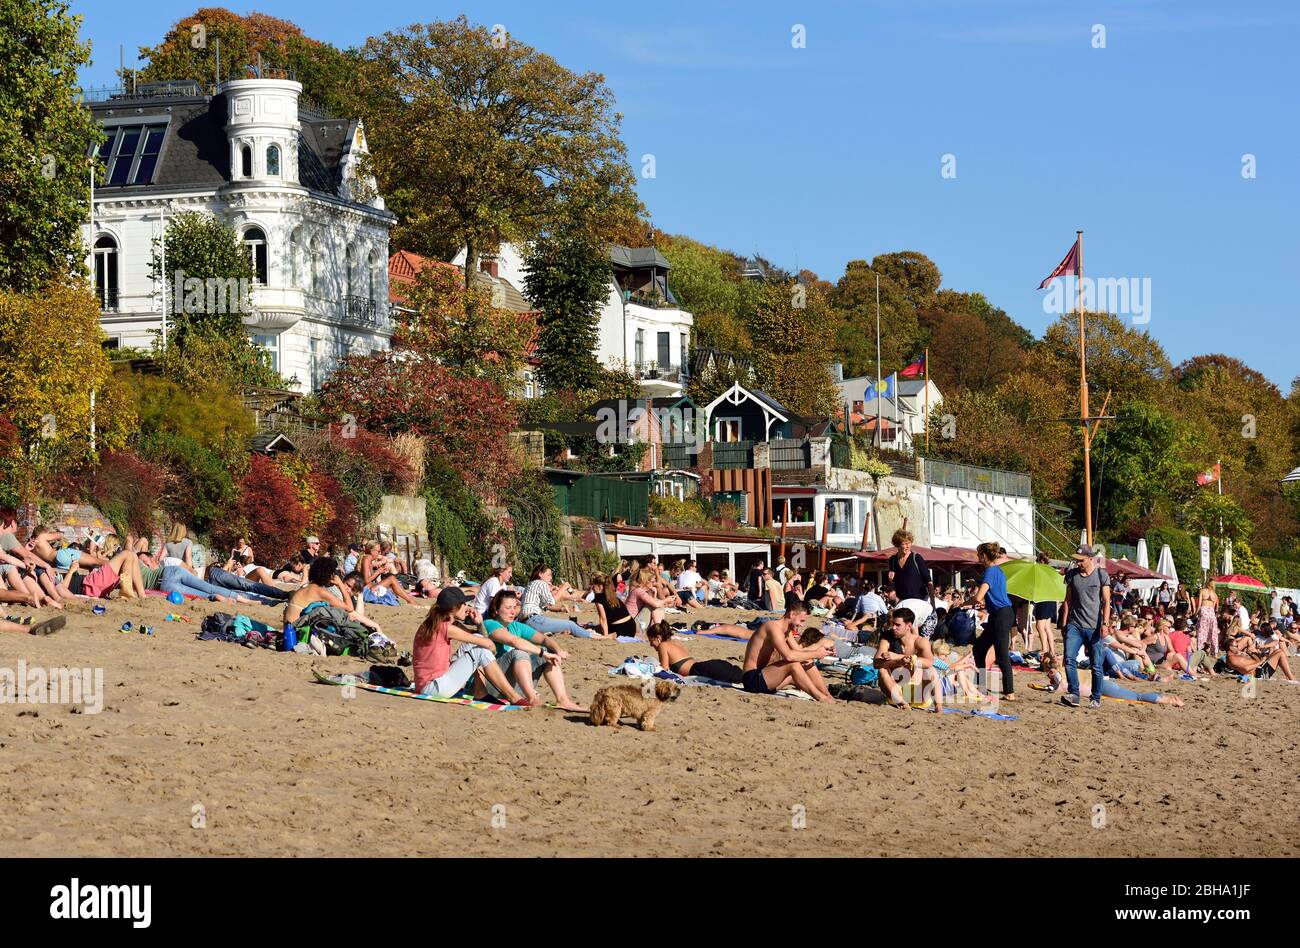 Germany, Hamburg, Övelgönne, villas and beach on the banks of river Elbe Stock Photo